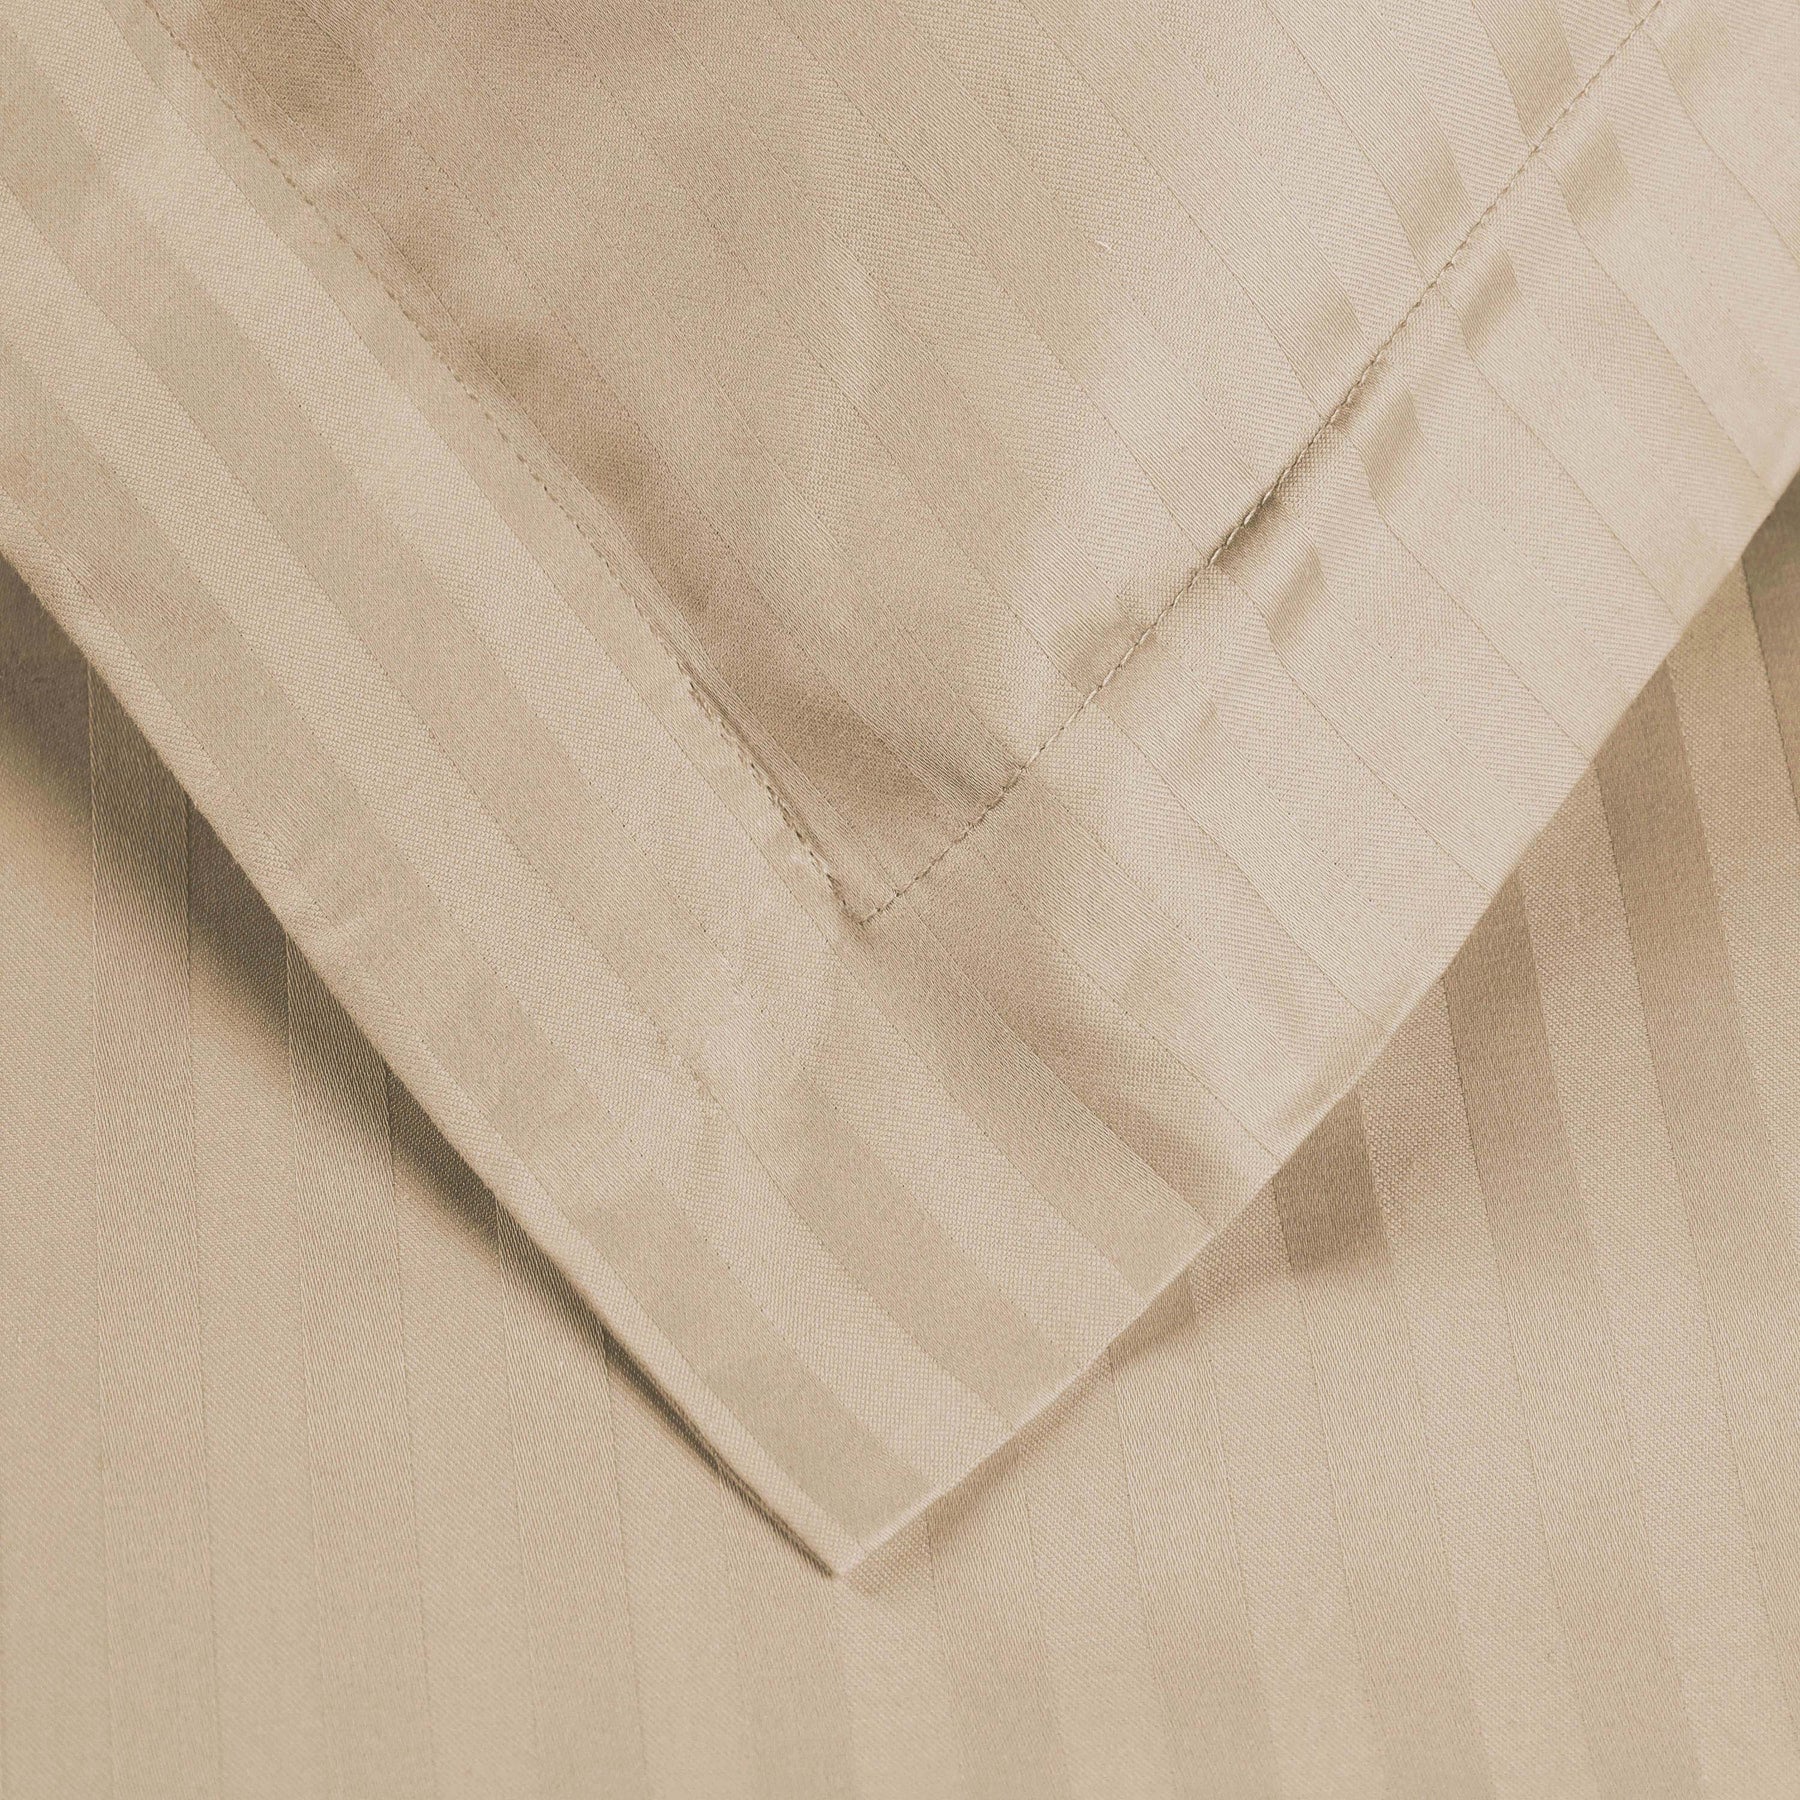 Superior Premium 600 Thread Count Egyptian Cotton Solid Duvet Cover Set - Beige